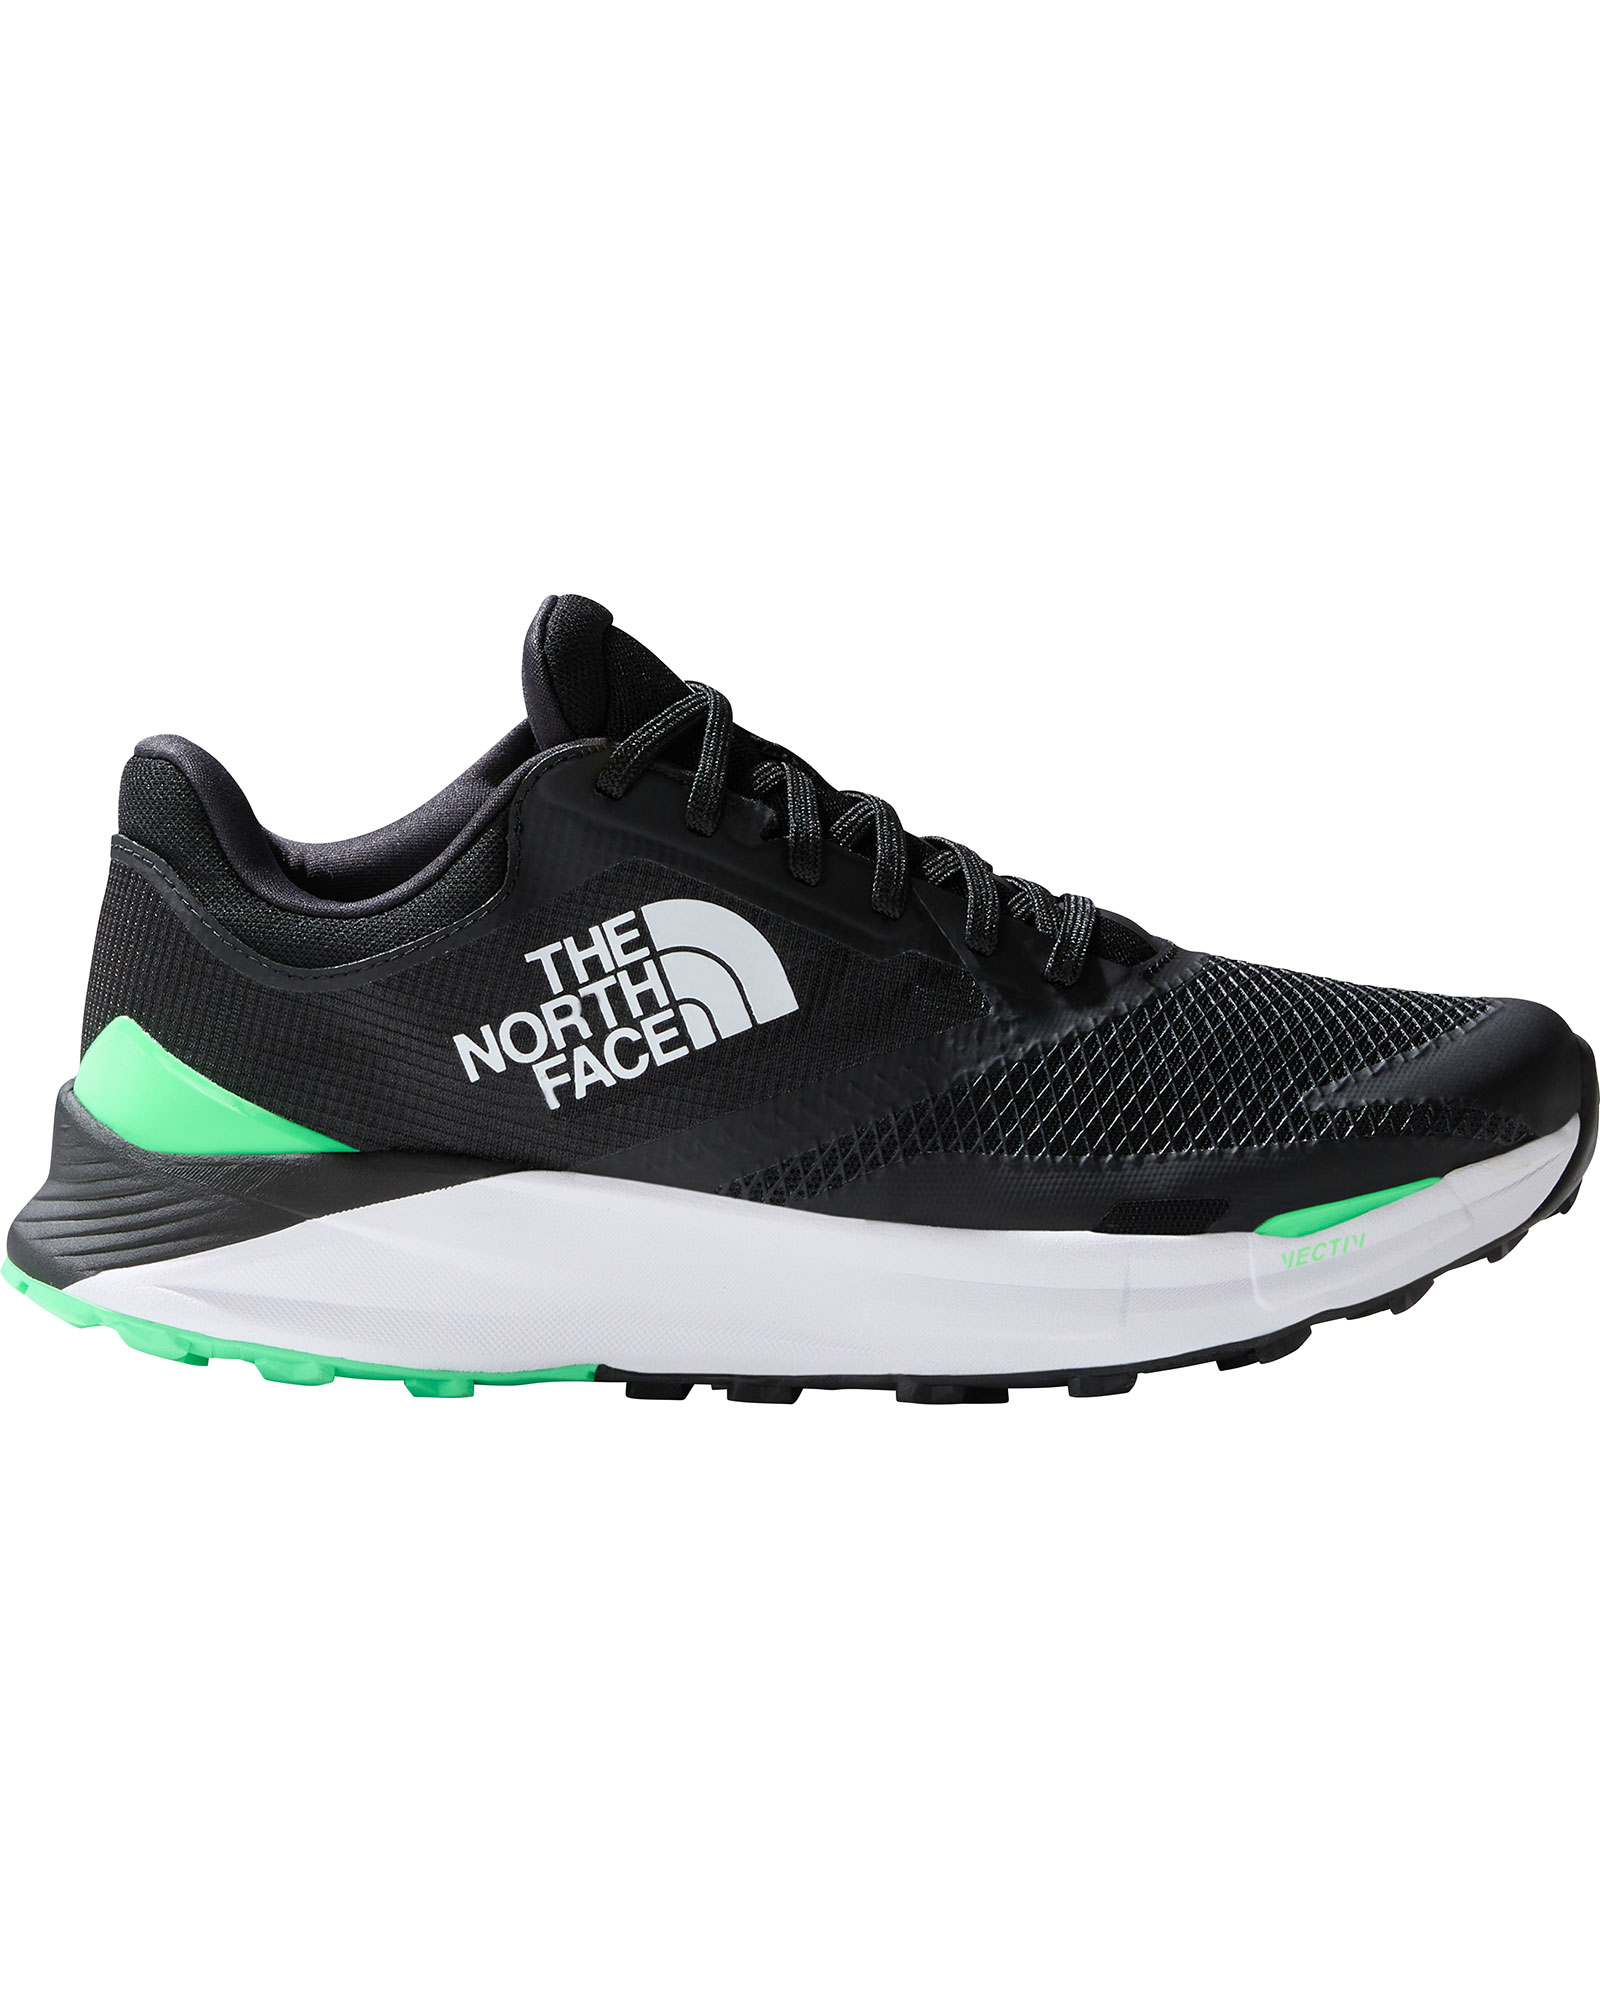 The North Face Vectiv Enduris 3 Men’s Trail Shoes - TNF Black/Chlorophyll Green UK 8.5